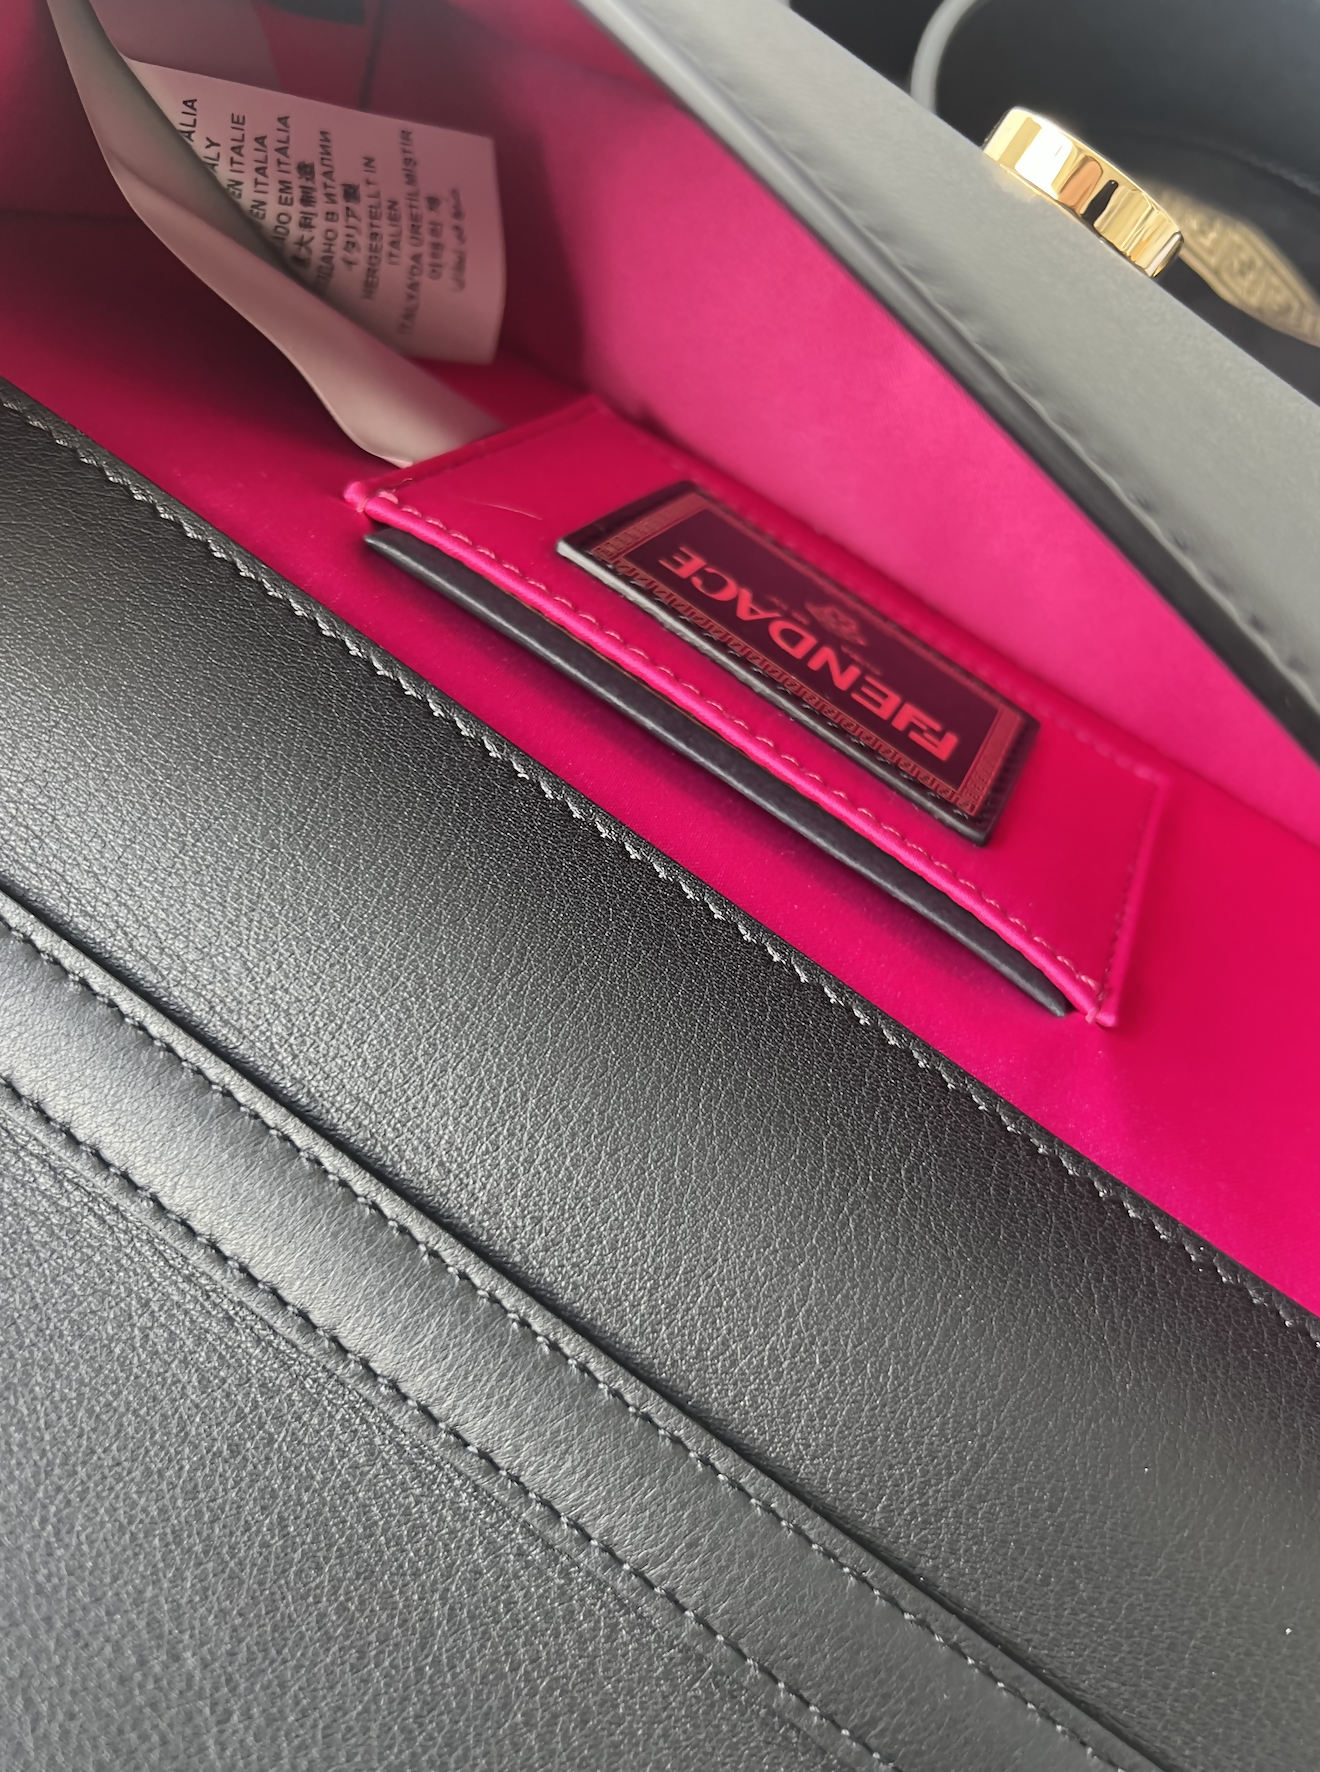 Baguette leather handbag Fendi X Versace Gold in Leather - 23341660